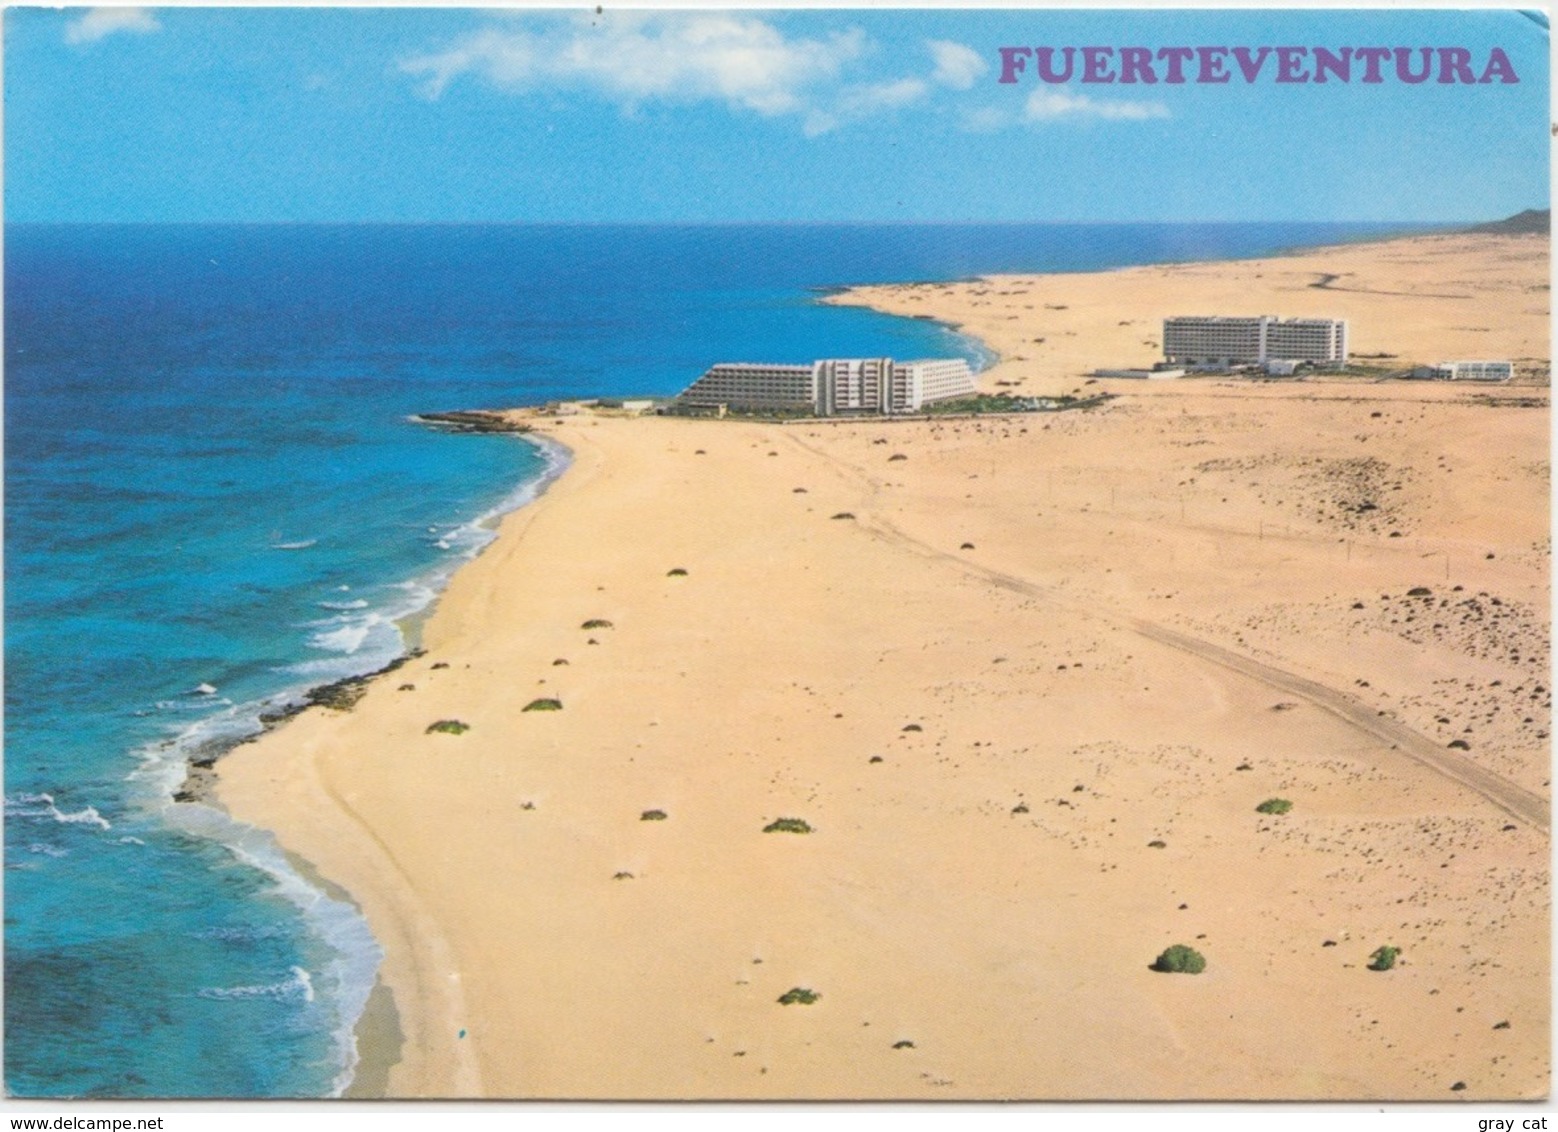 FUERTEVENTURA, Islas Canarias, Spain, 1982 Used Postcard [21916] - Fuerteventura